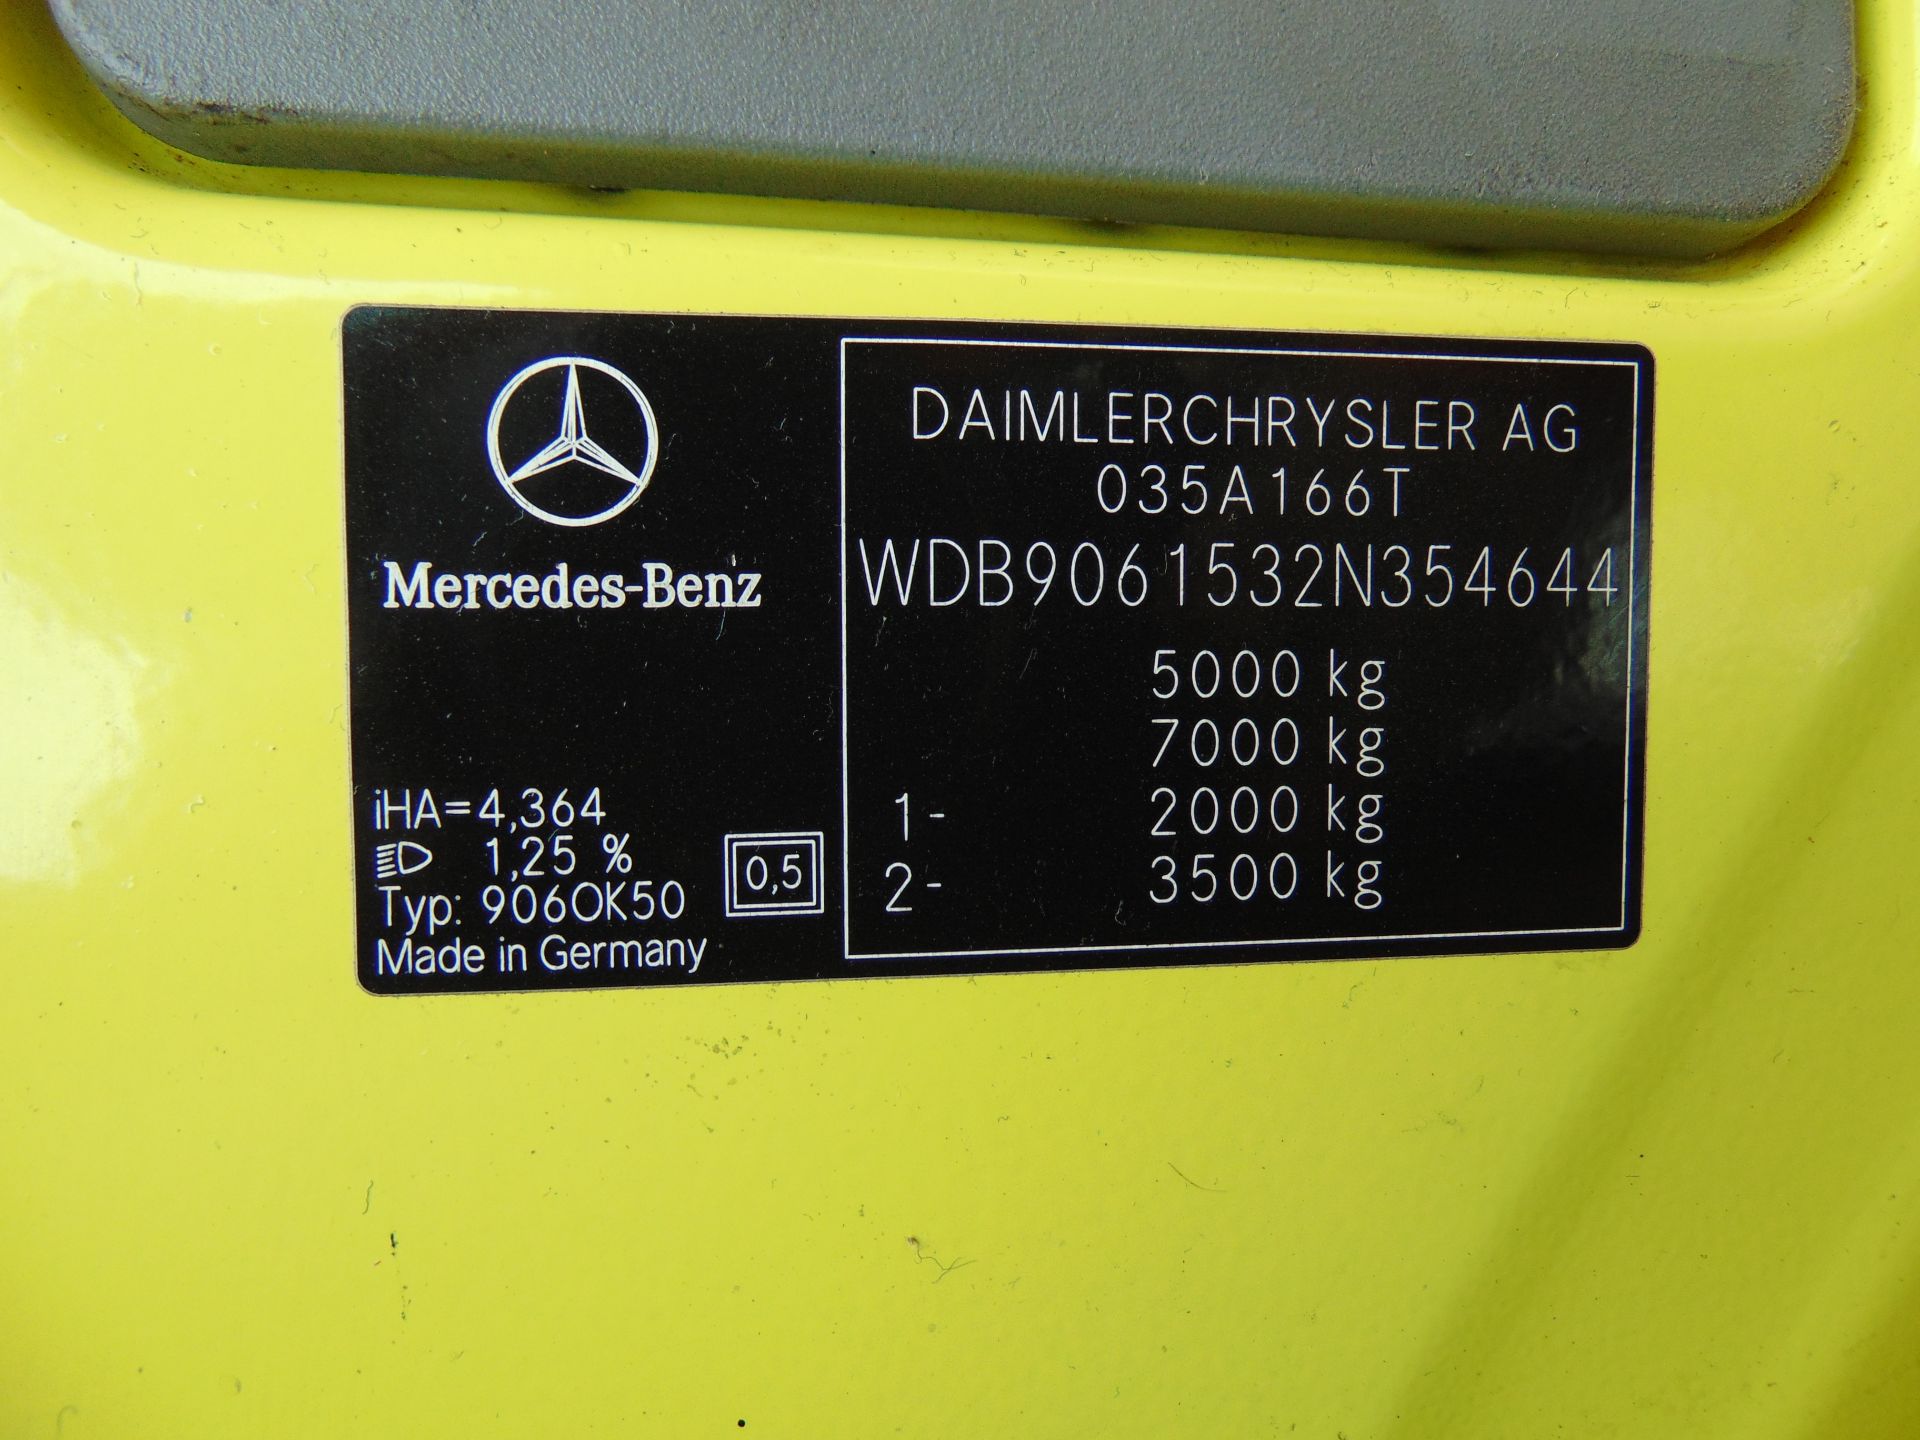 Mercedes Sprinter 515 CDI Turbo Diesel Ambulance - Image 21 of 21